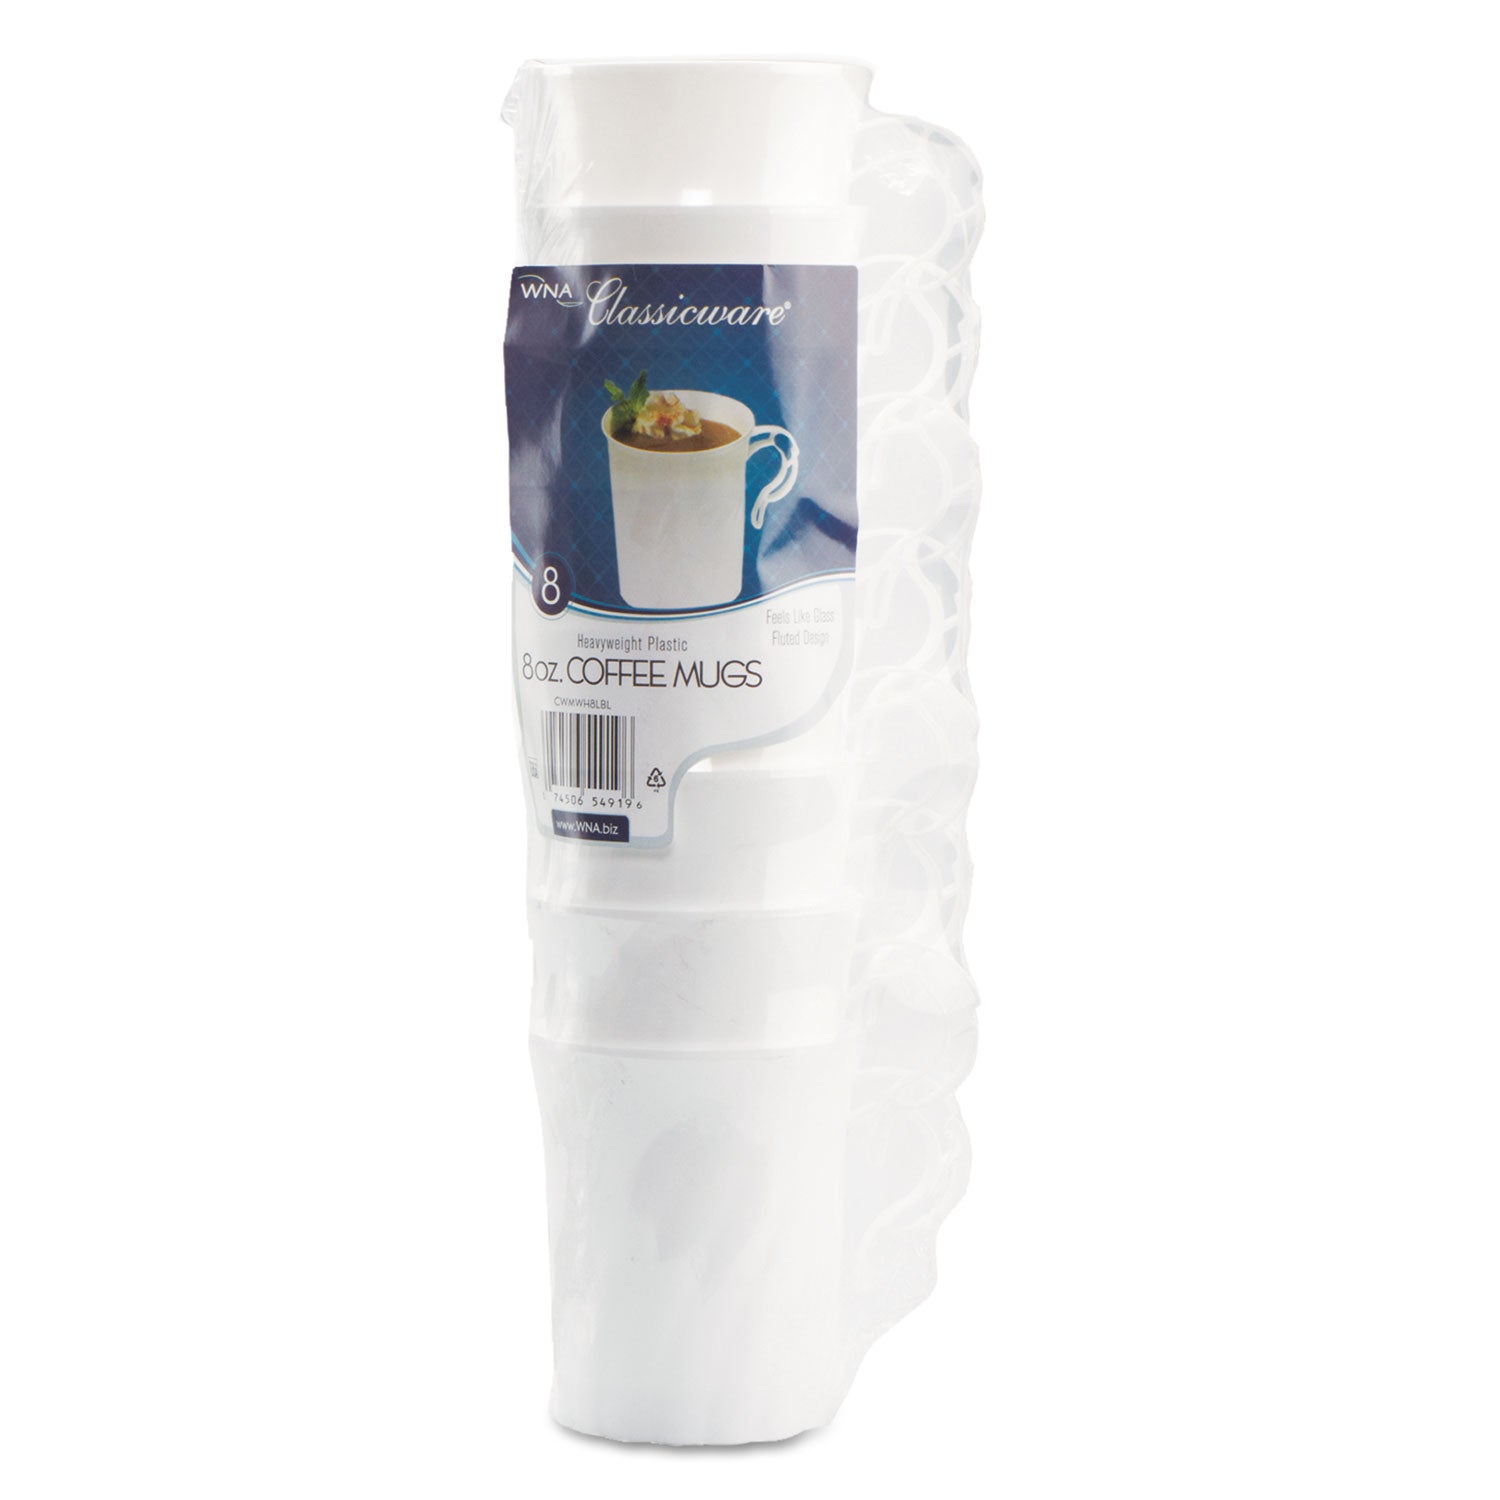 classicware-plastic-coffee-mugs-8-oz-white-8-pack-24-packs-carton_wnarscwm8248w - 1